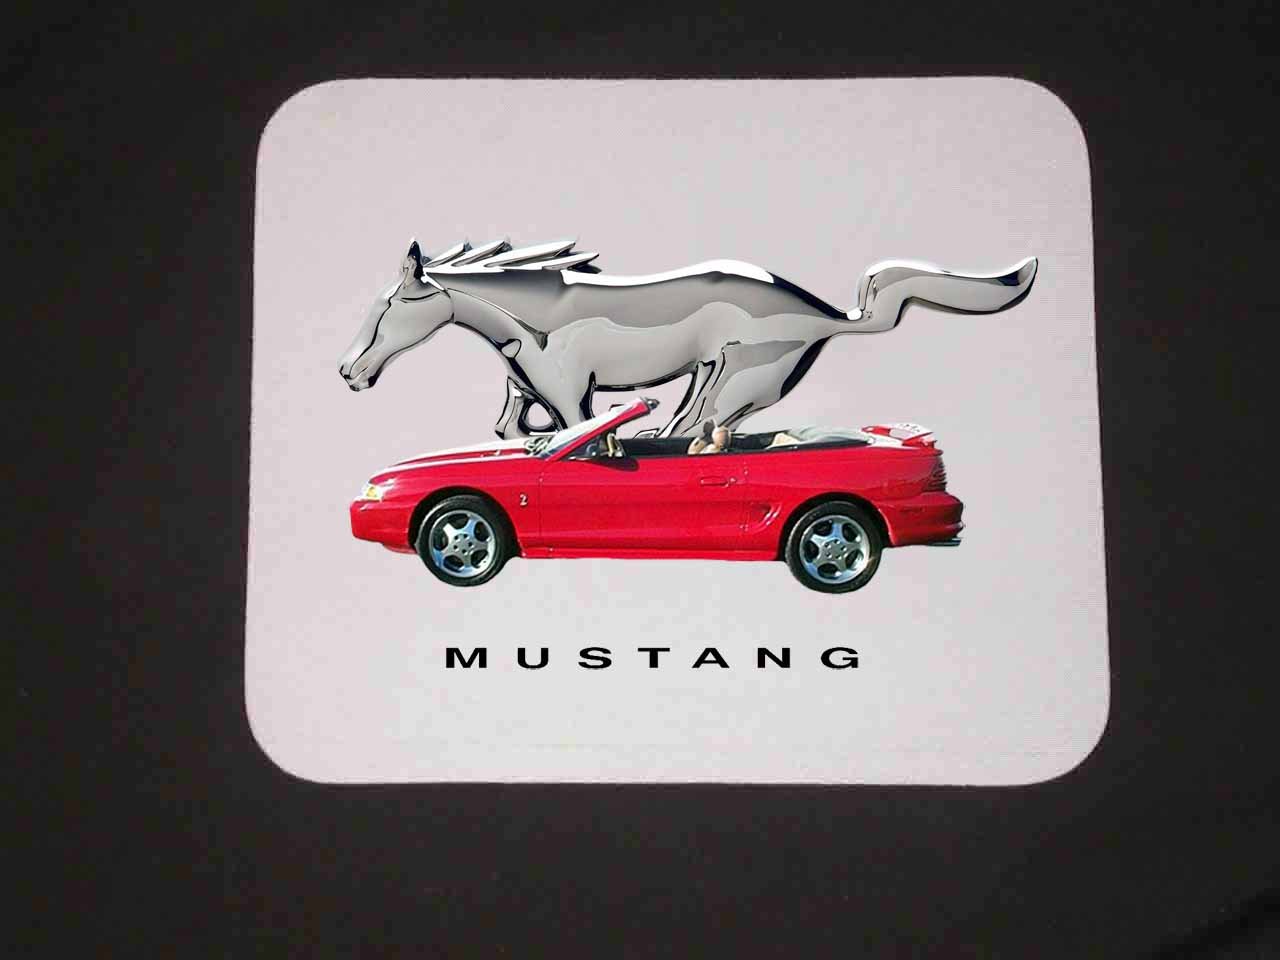 New 1994 Ford Mustang Cobra Mousepad!